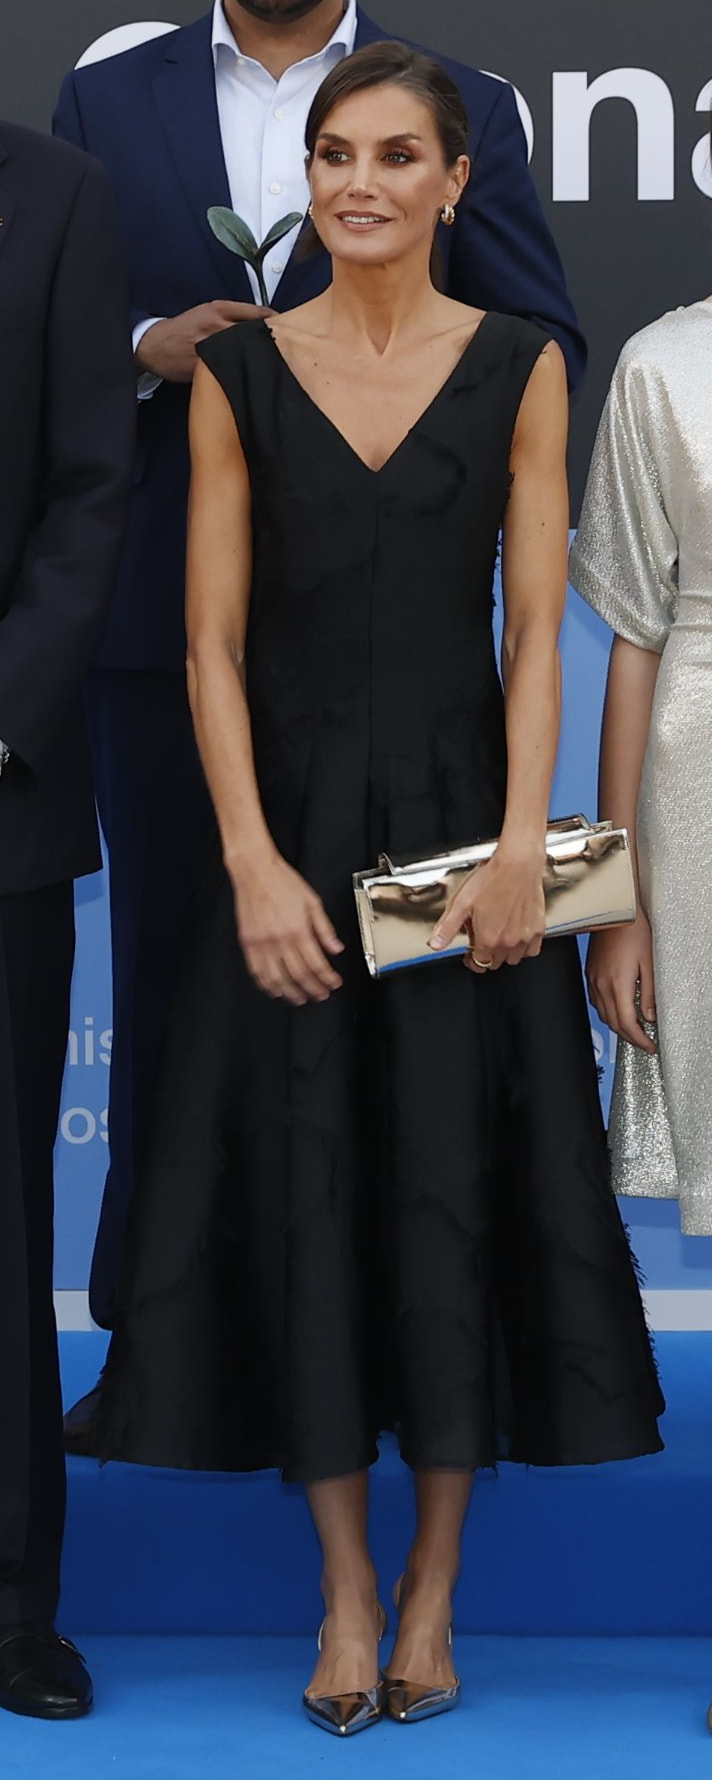 H&M Jacquard-Weave Dress in Black​ as seen on Queen Letizia.